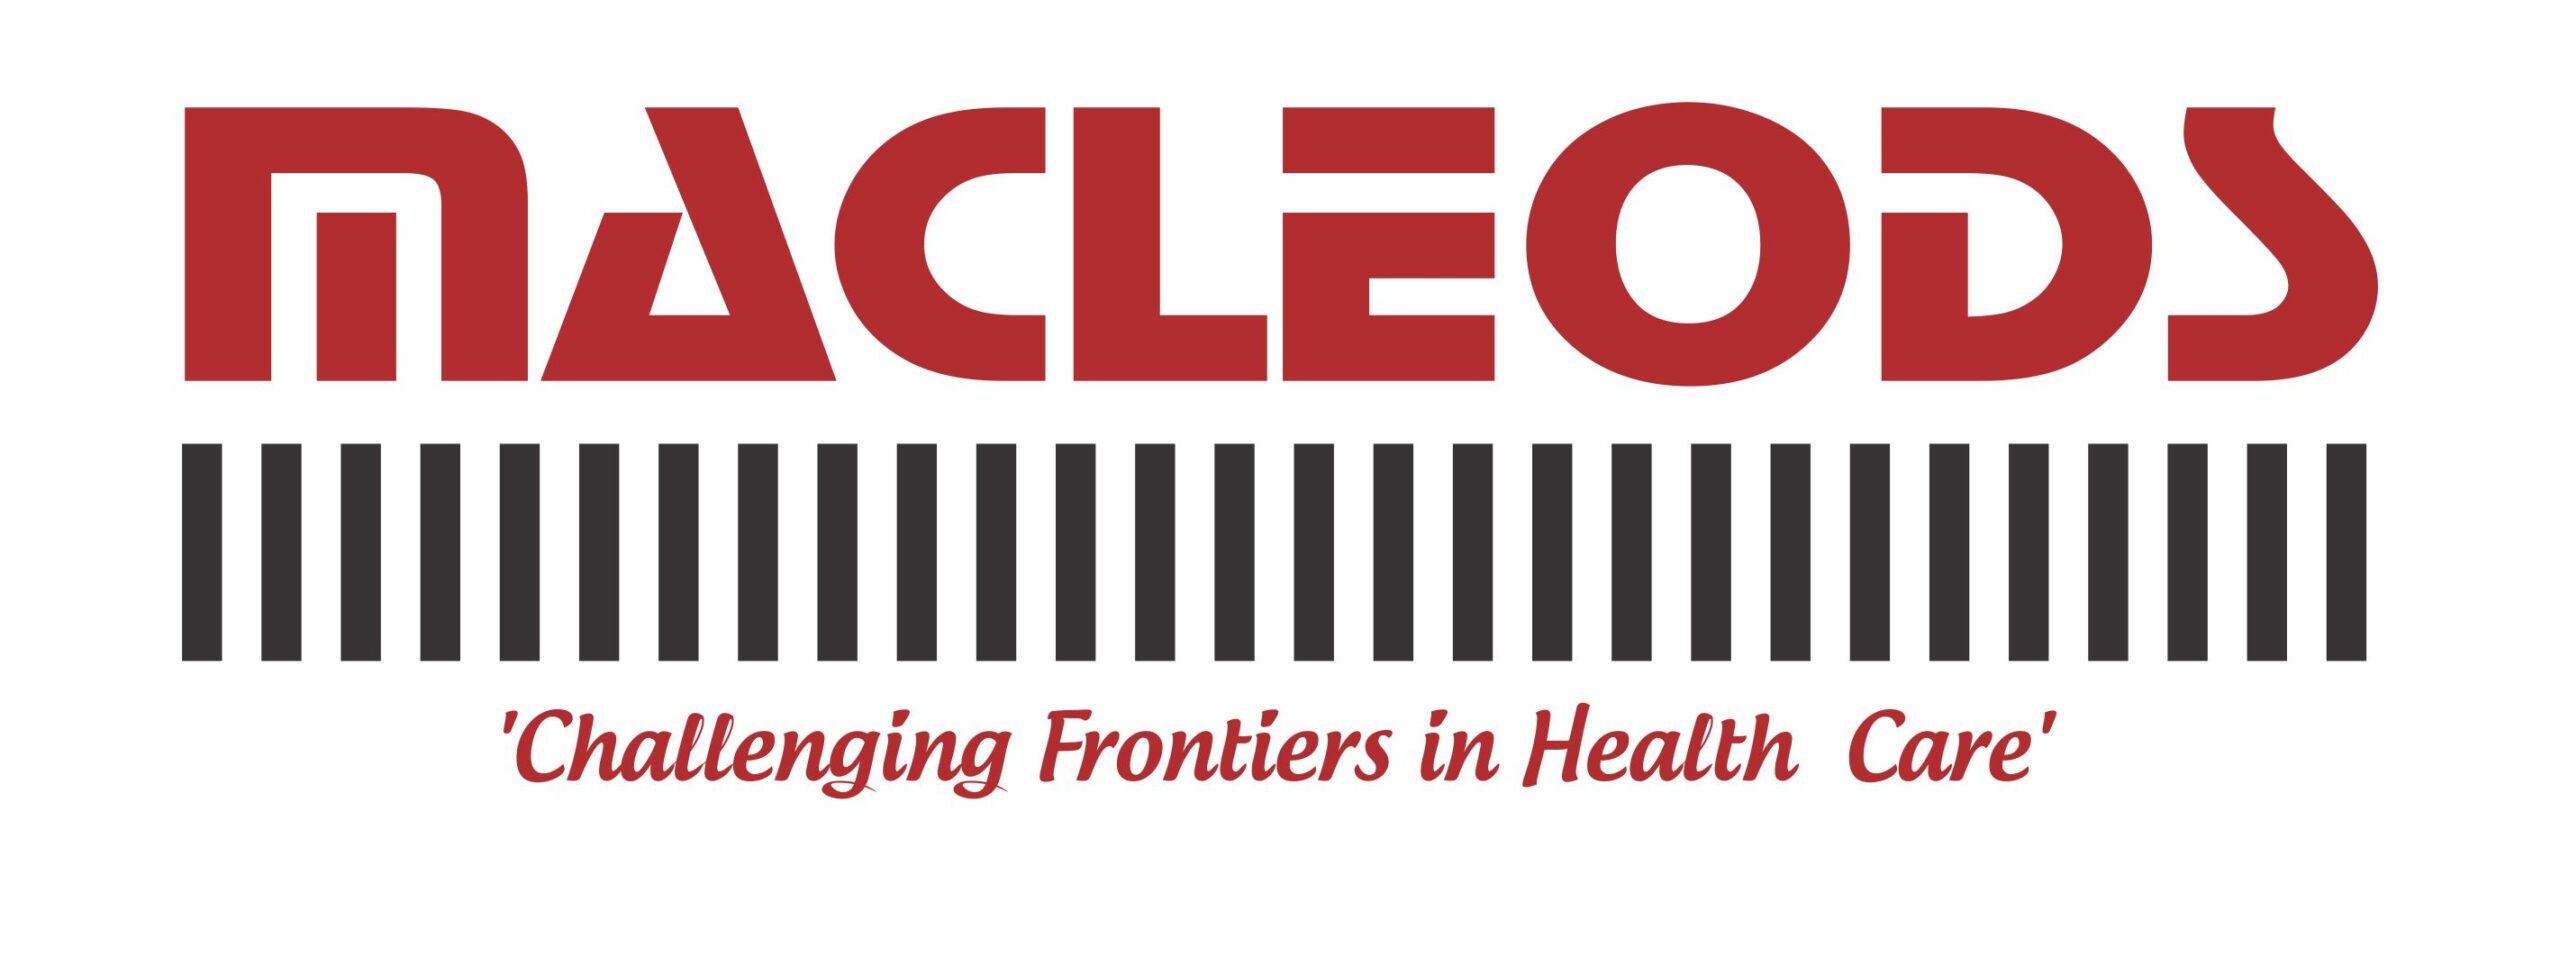 Macleods logo